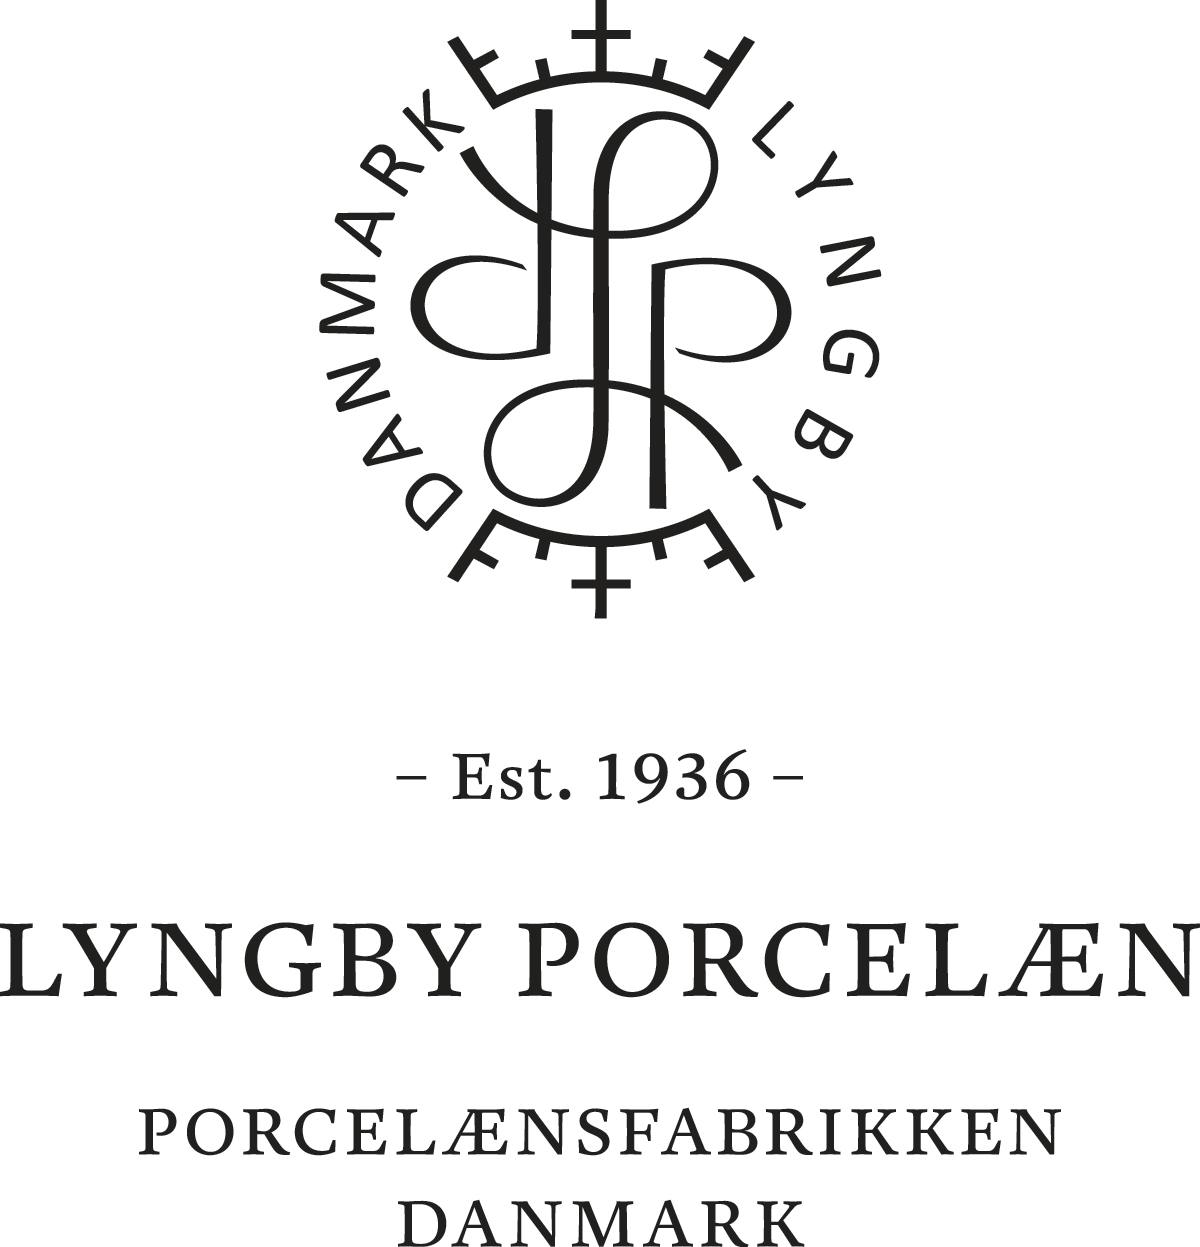 Lyngby Porcelæn